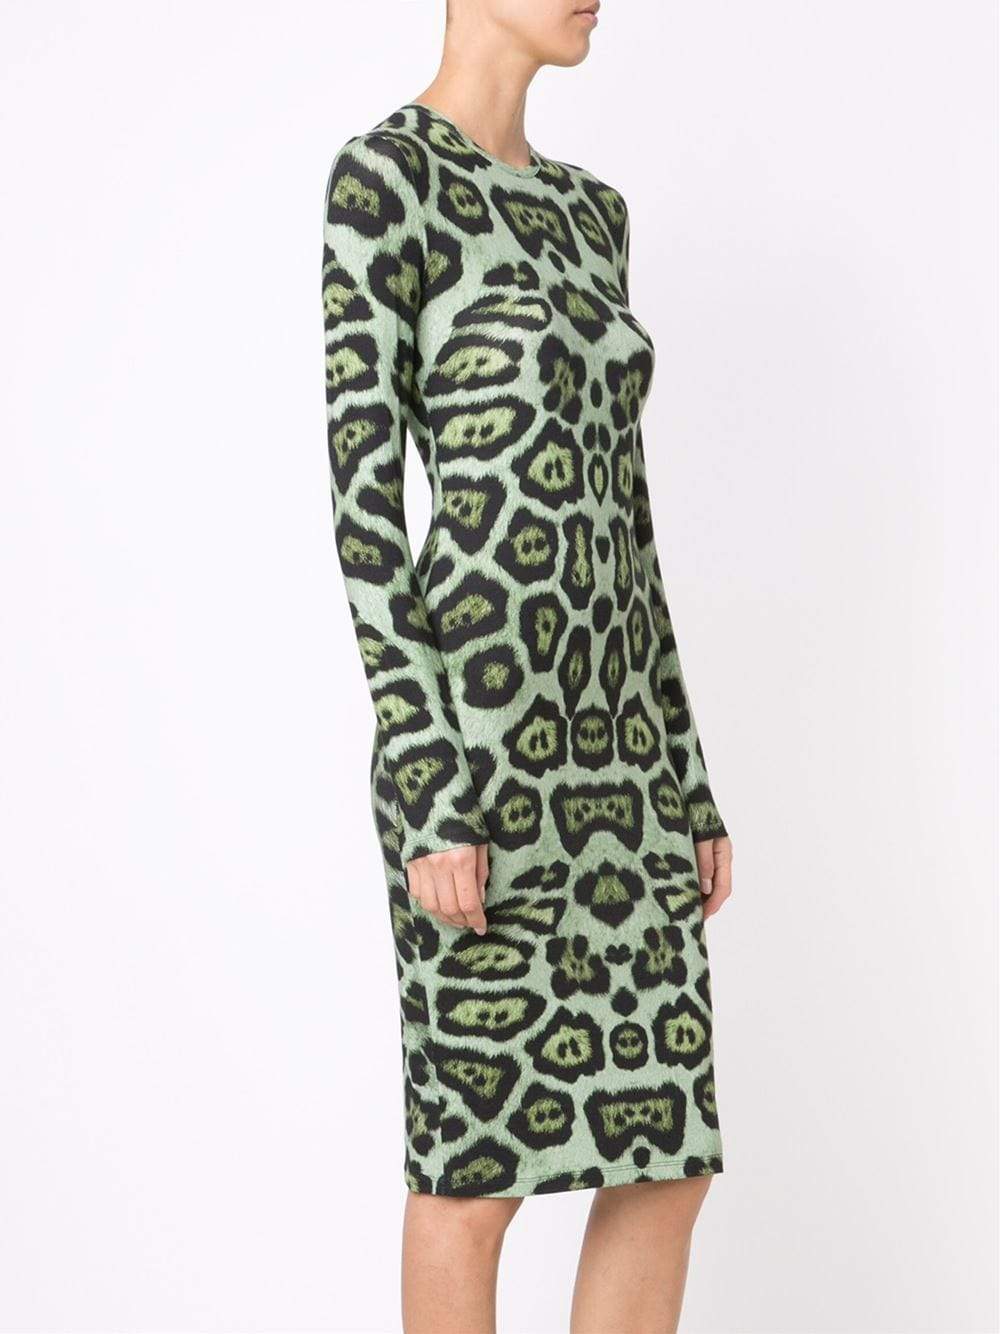 GIVENCHY-Jaguar Jersey Dress-